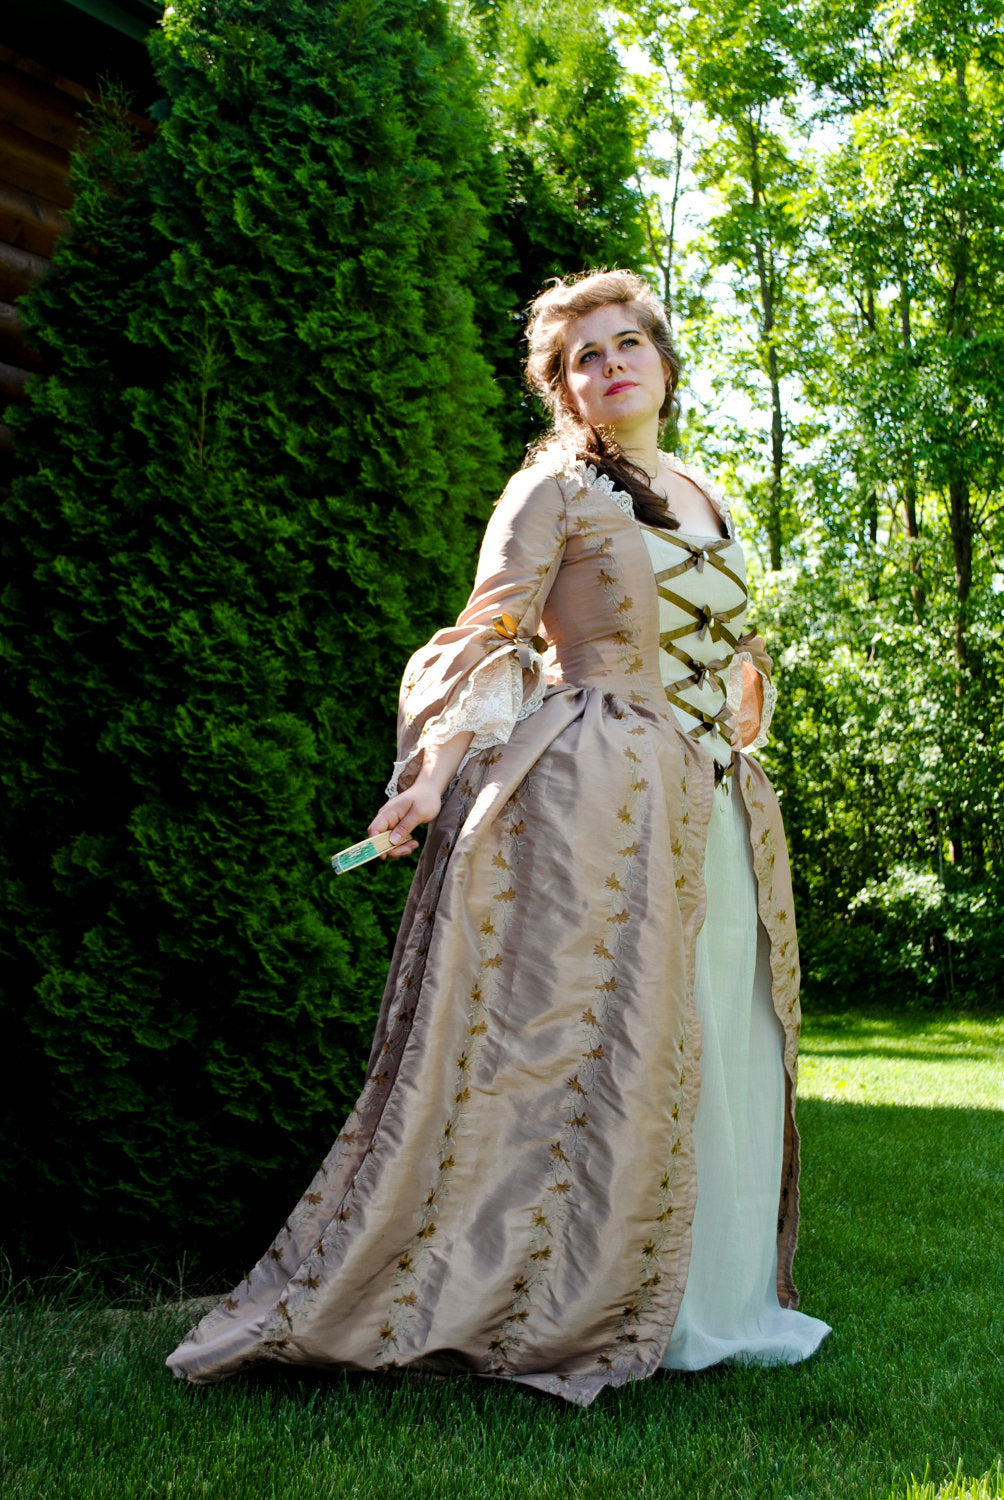 18th century dress